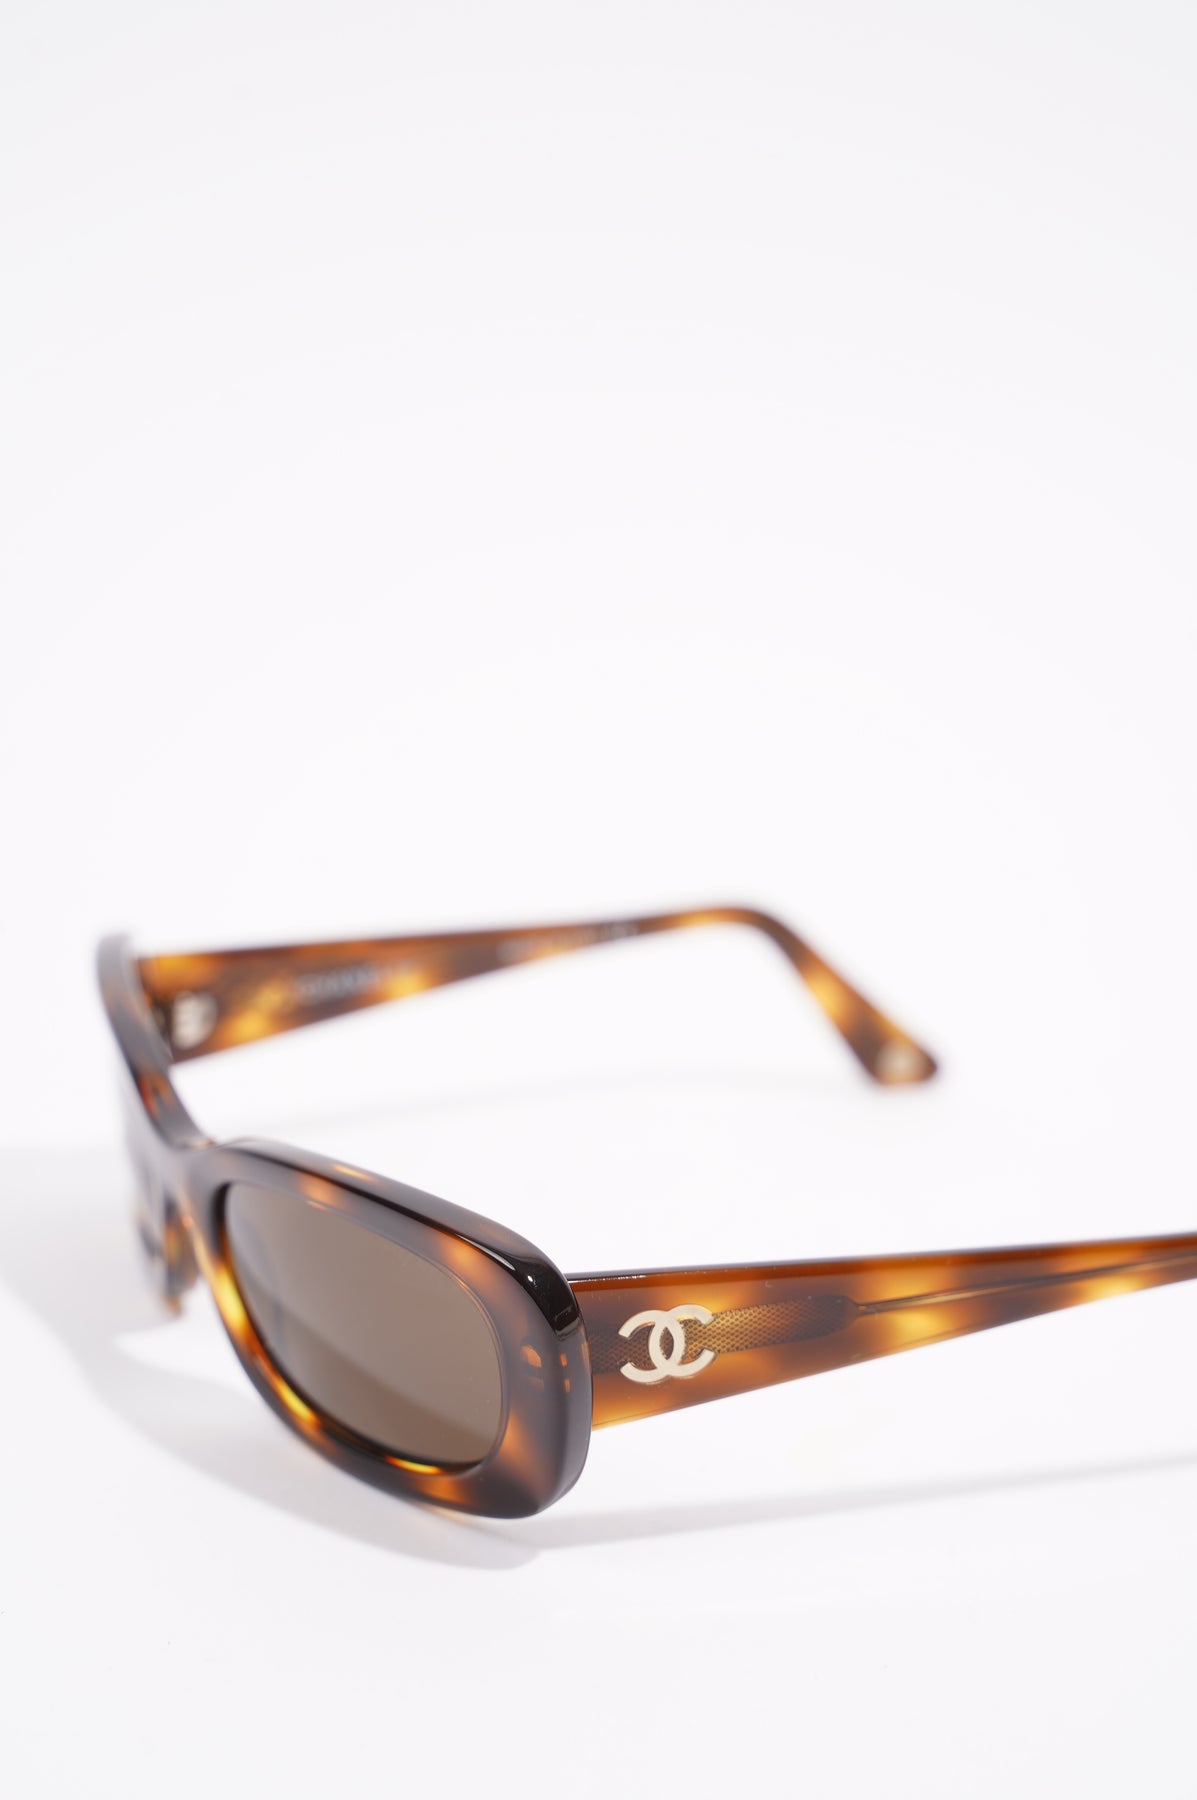 Chanel - Rectangle sunglasses dark tortoise eyewear ($480)